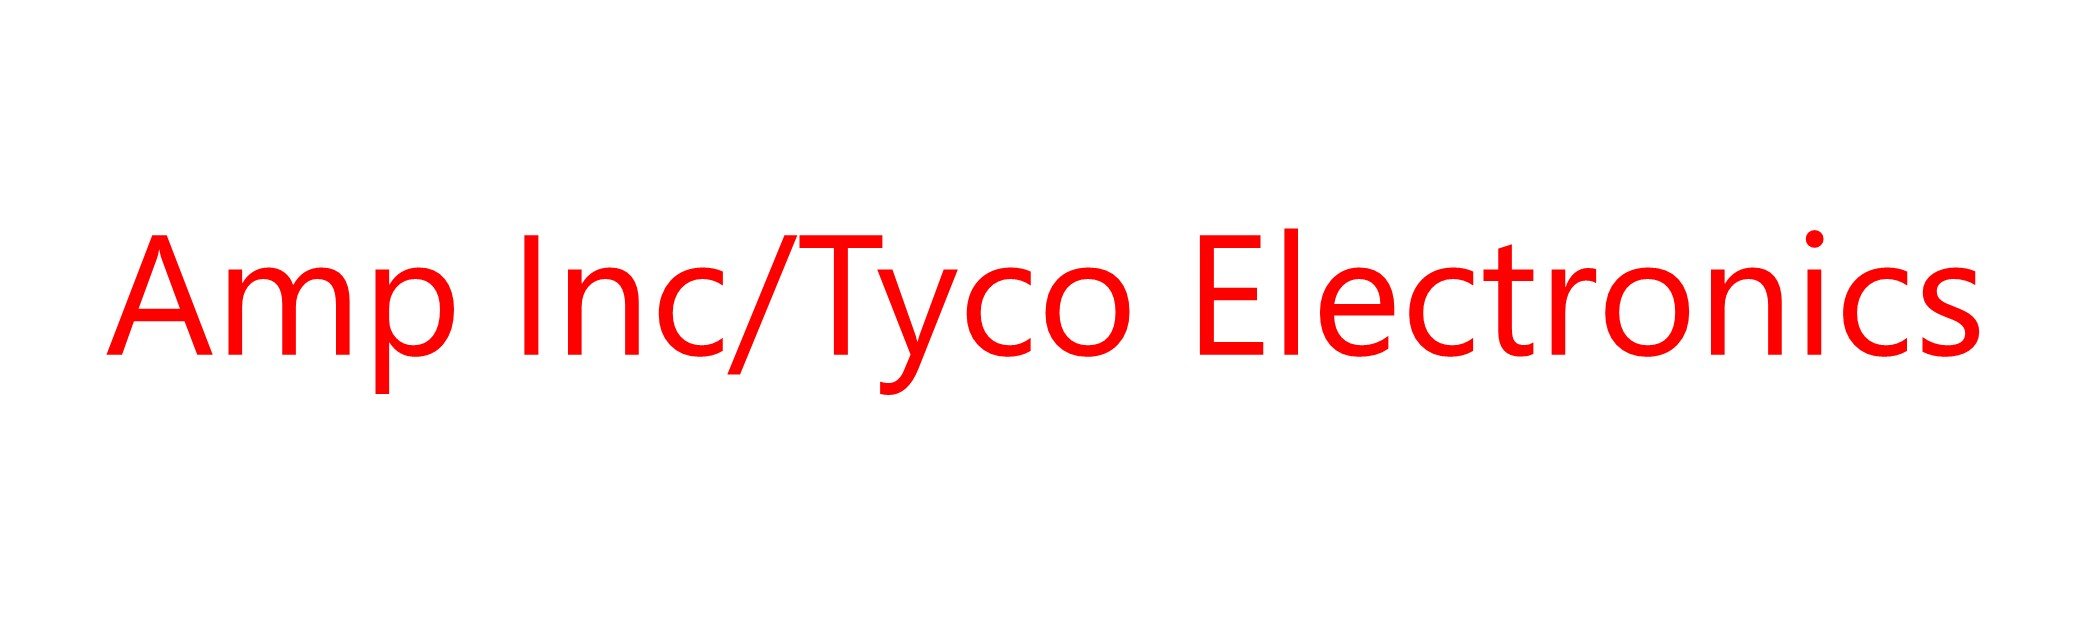 Amp Inc/Tyco Electronics